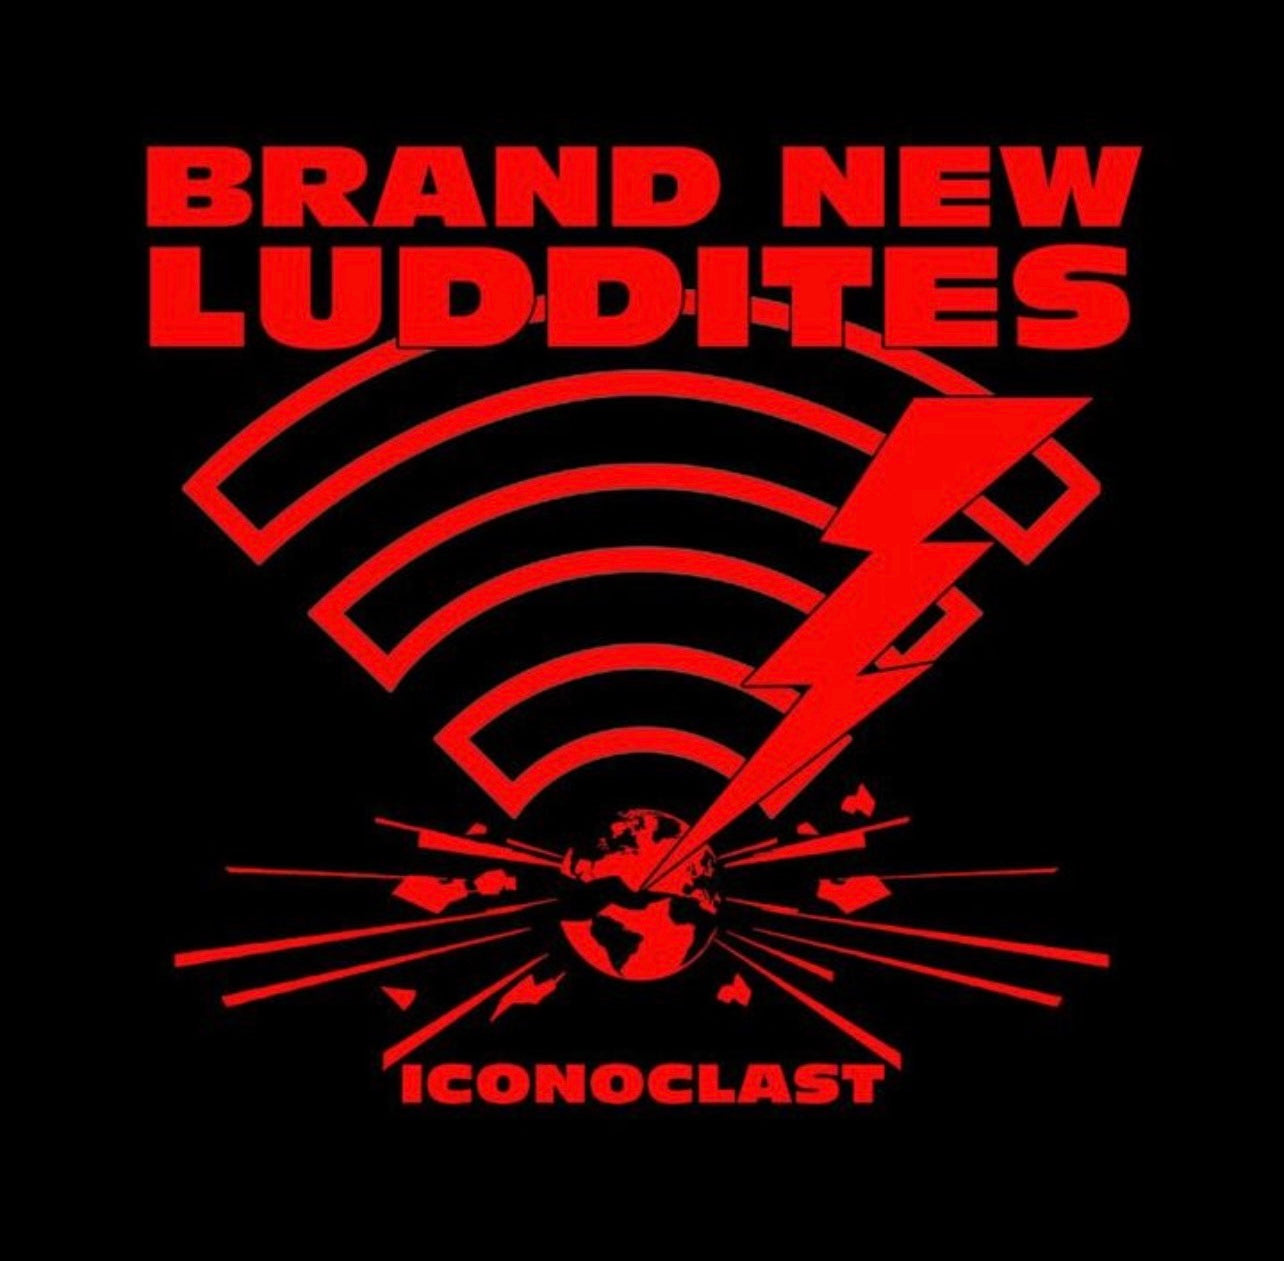 OMR-093 Brand New Luddites “Iconoclast” LP